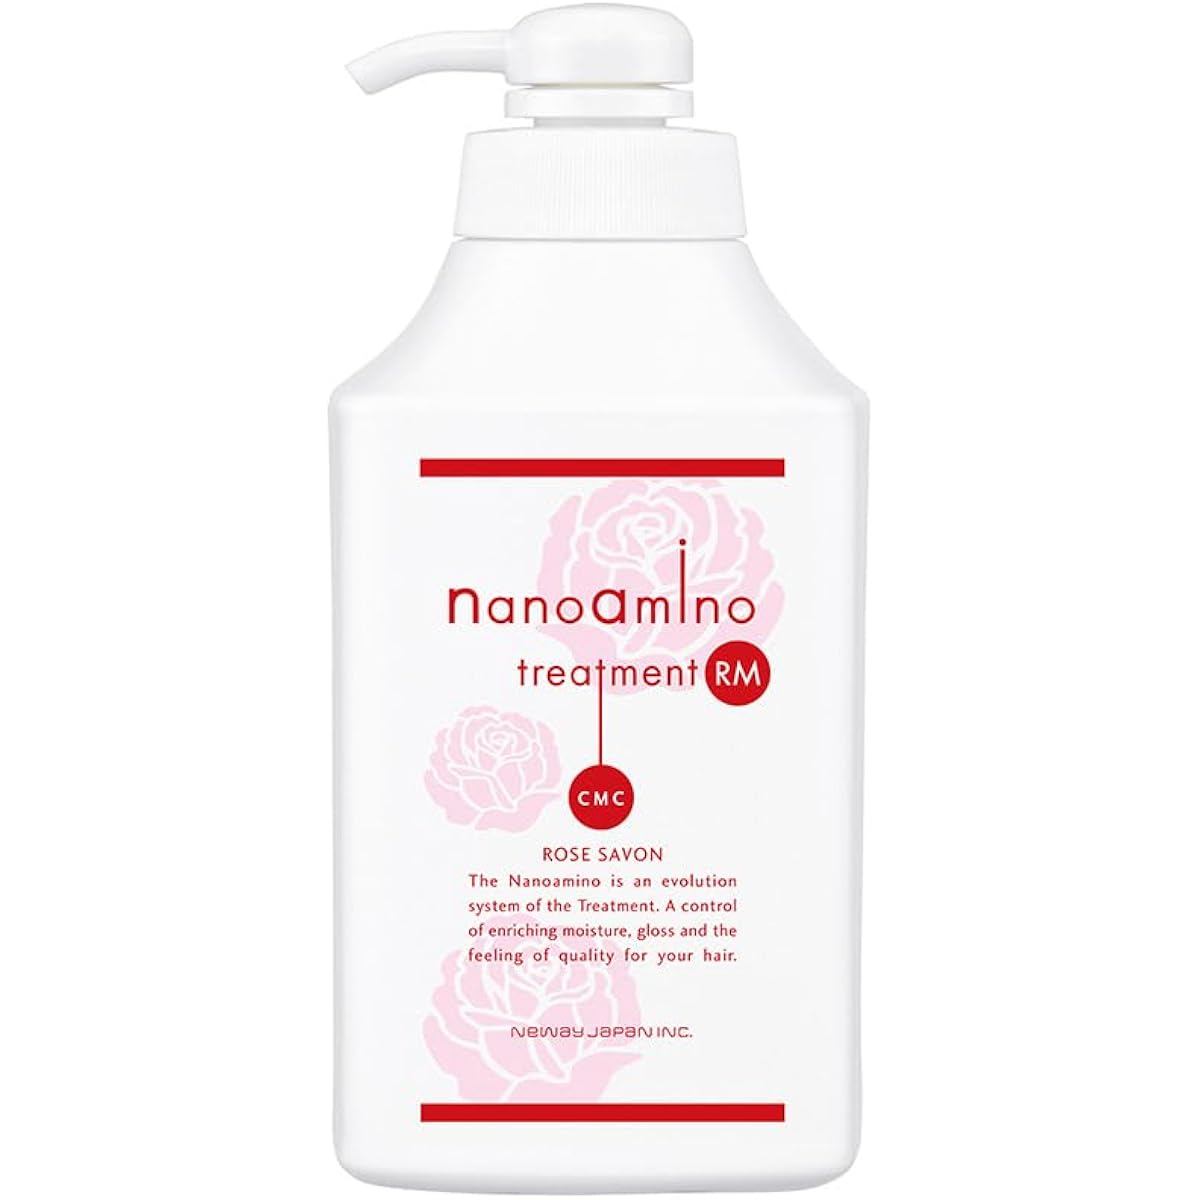 NANOAMINO Salon Treatment Beauty Salon Exclusive Collagen Contains Salon Exclusive Damage Repair Nano Amino Treatment RM-RO Moist Type Moisture Large Capacity 1000g